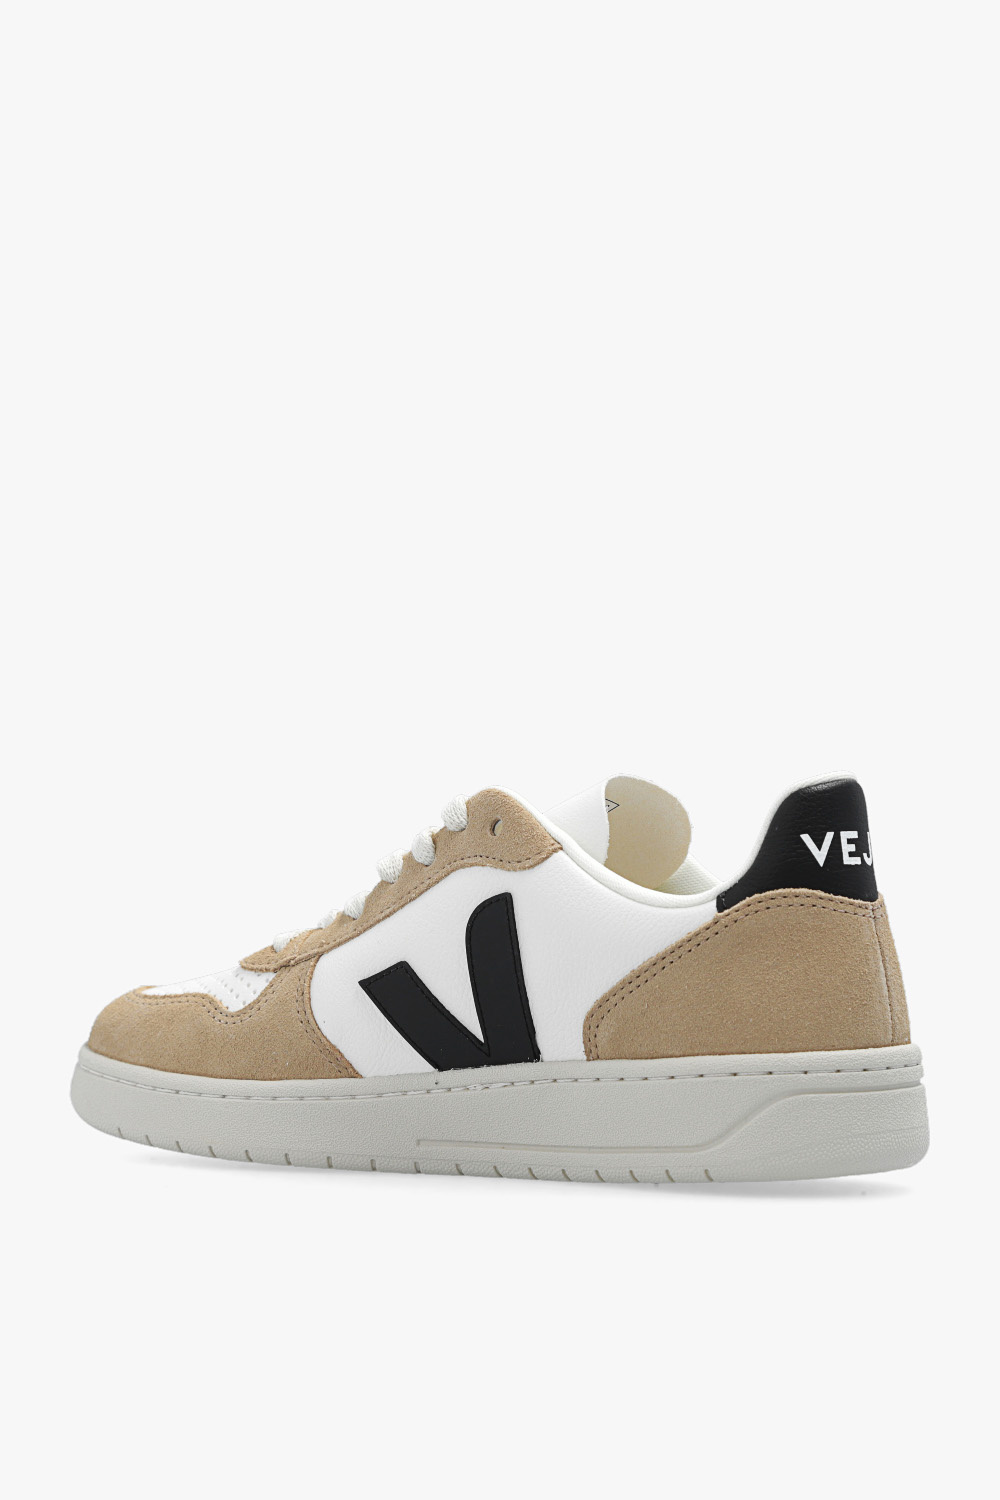 Veja ‘V-10 Chromefree Leather’ sneakers